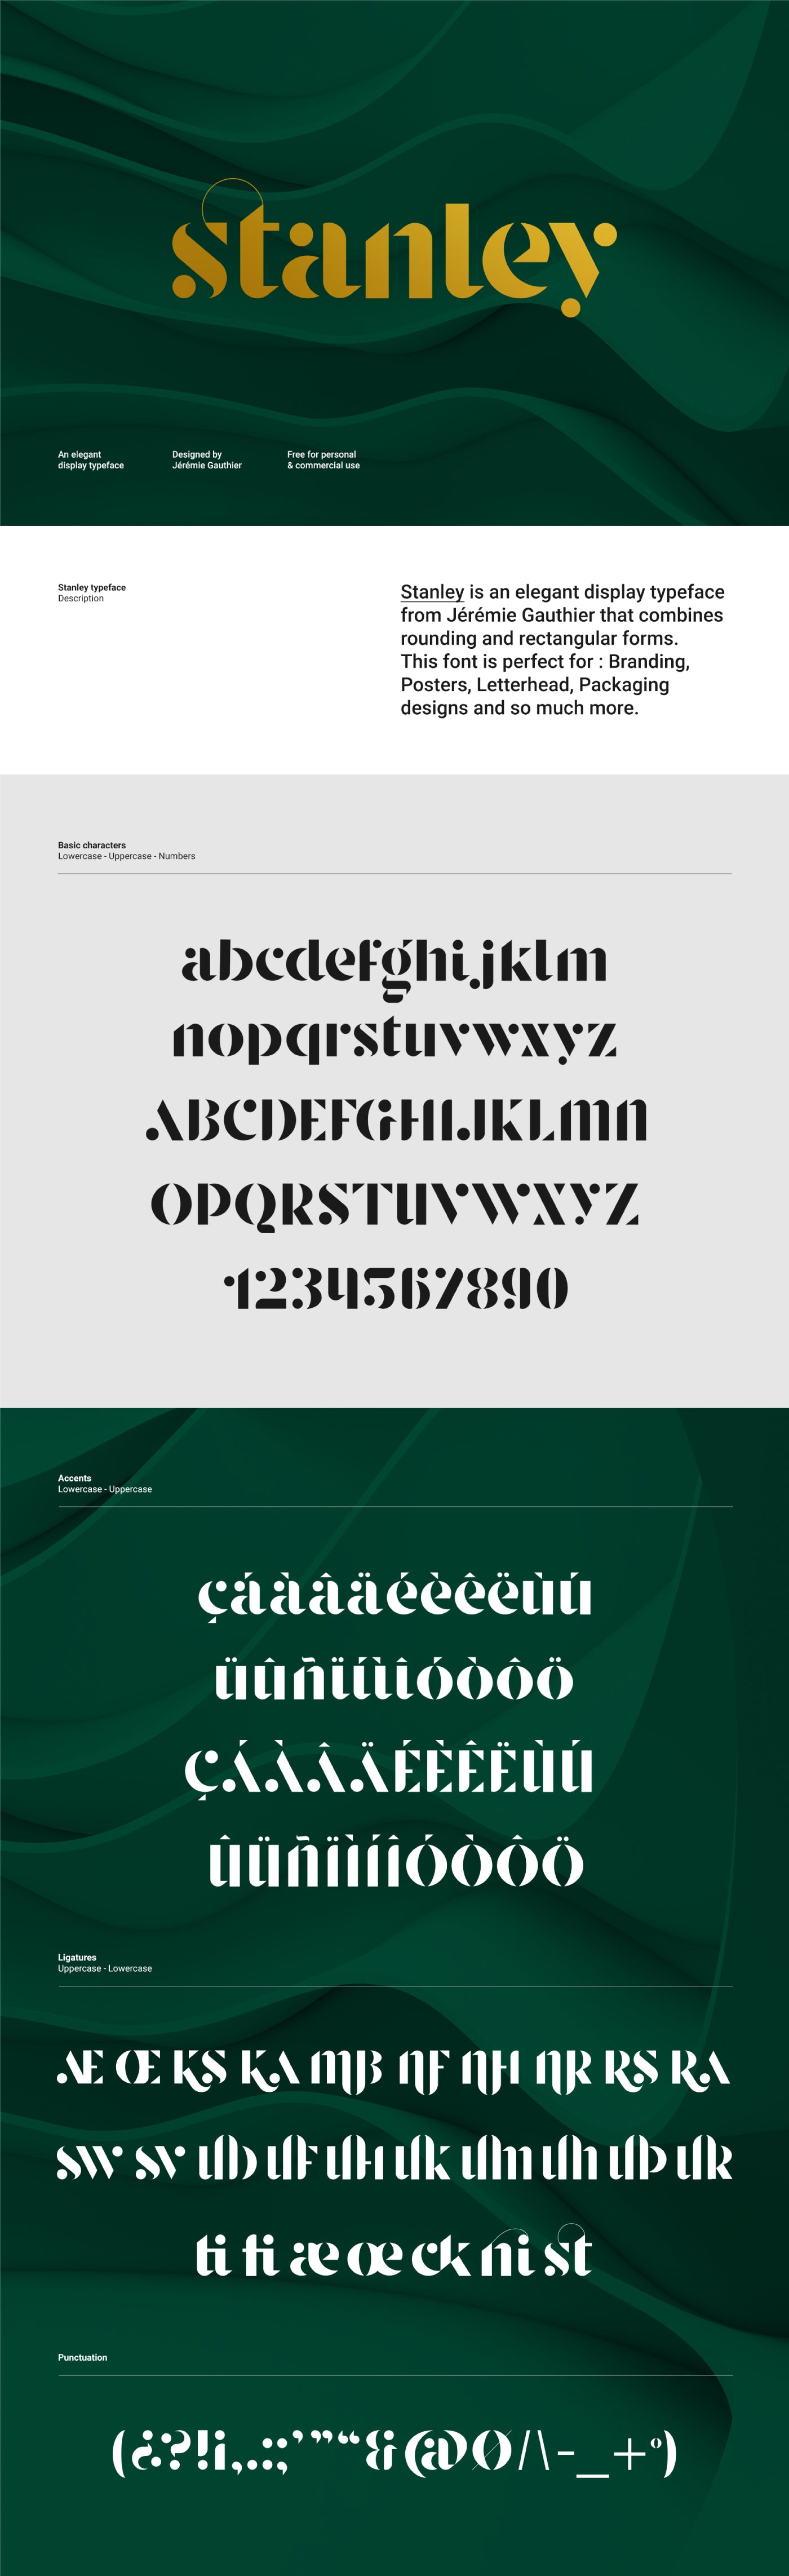 Free Stanley Elegant Display Typeface